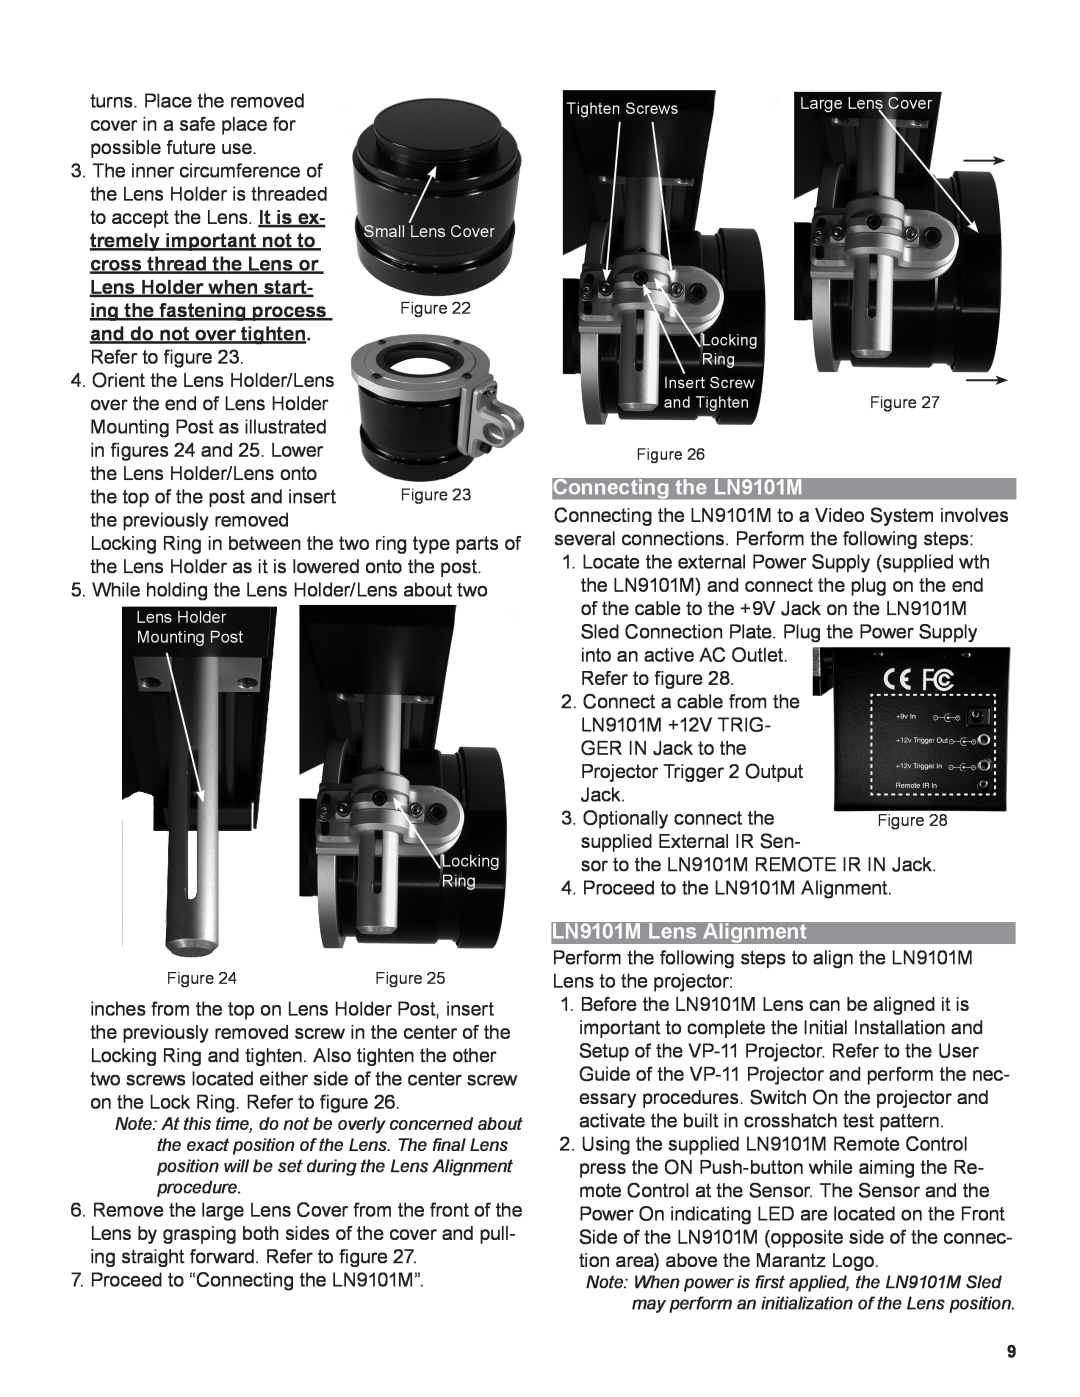 Marantz manual Connecting the LN9101M, LN9101M Lens Alignment, Lens Holder Mounting Post Locking Ring, Tighten Screws 